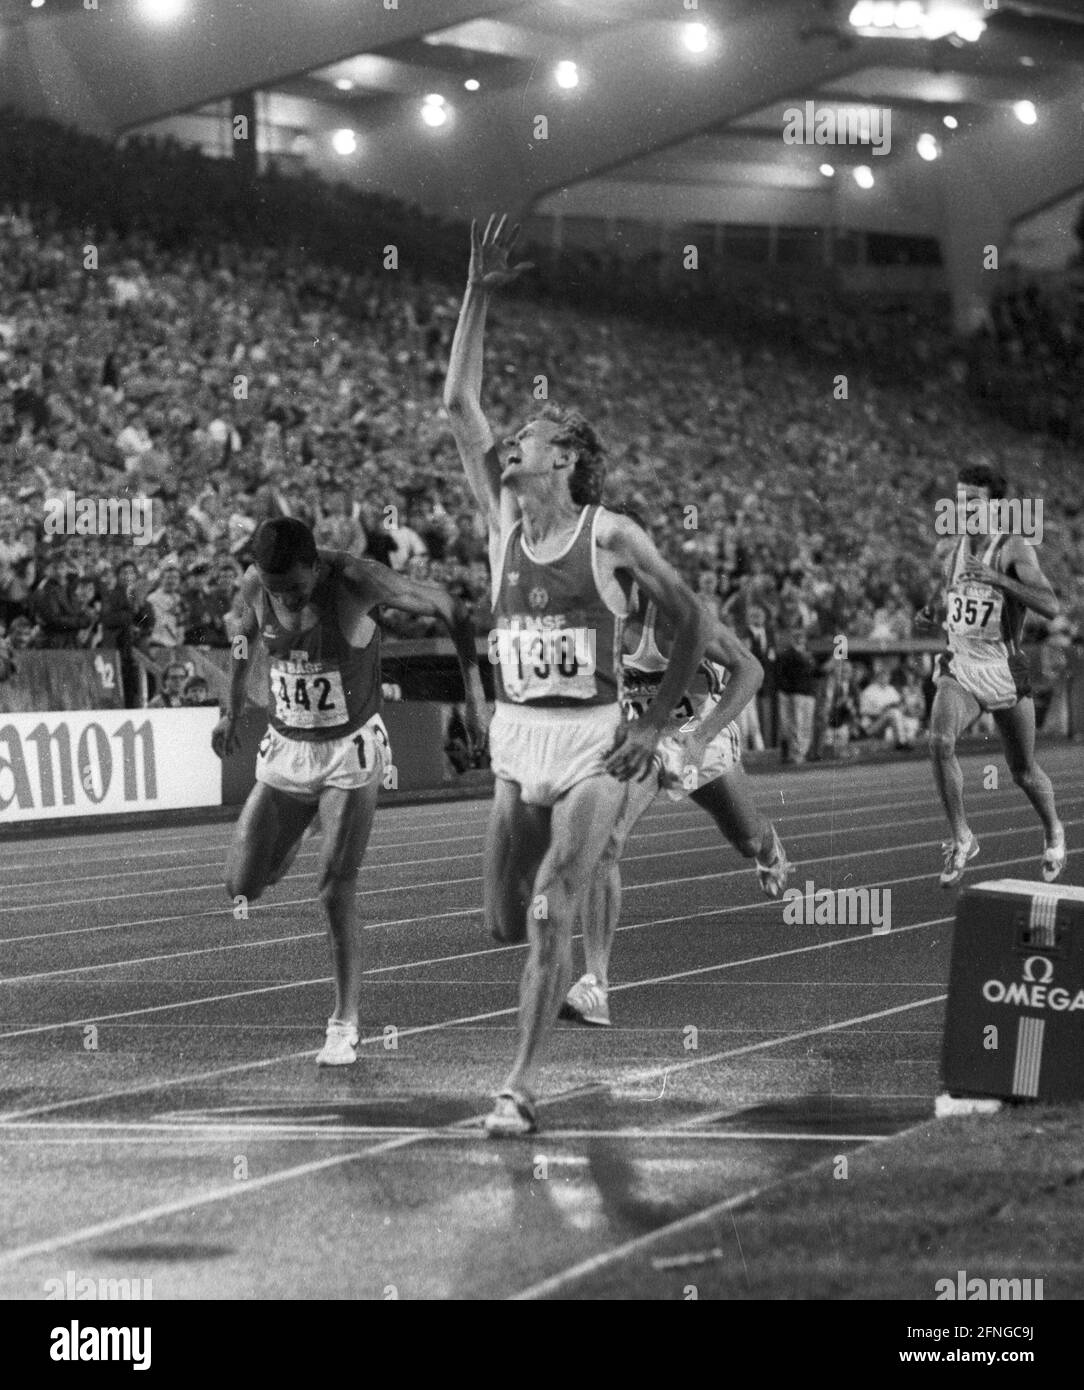 European Athletics Championships 1986 in Stuttgart. Finish: 3000m steeplechase. Winner: 138=Hagen Melzer (GDR) ahead of 442= Franceso Panetta (ITA) and Patriz Ilg (BRD/verd.) 29.08.1986. [automated translation] Stock Photo